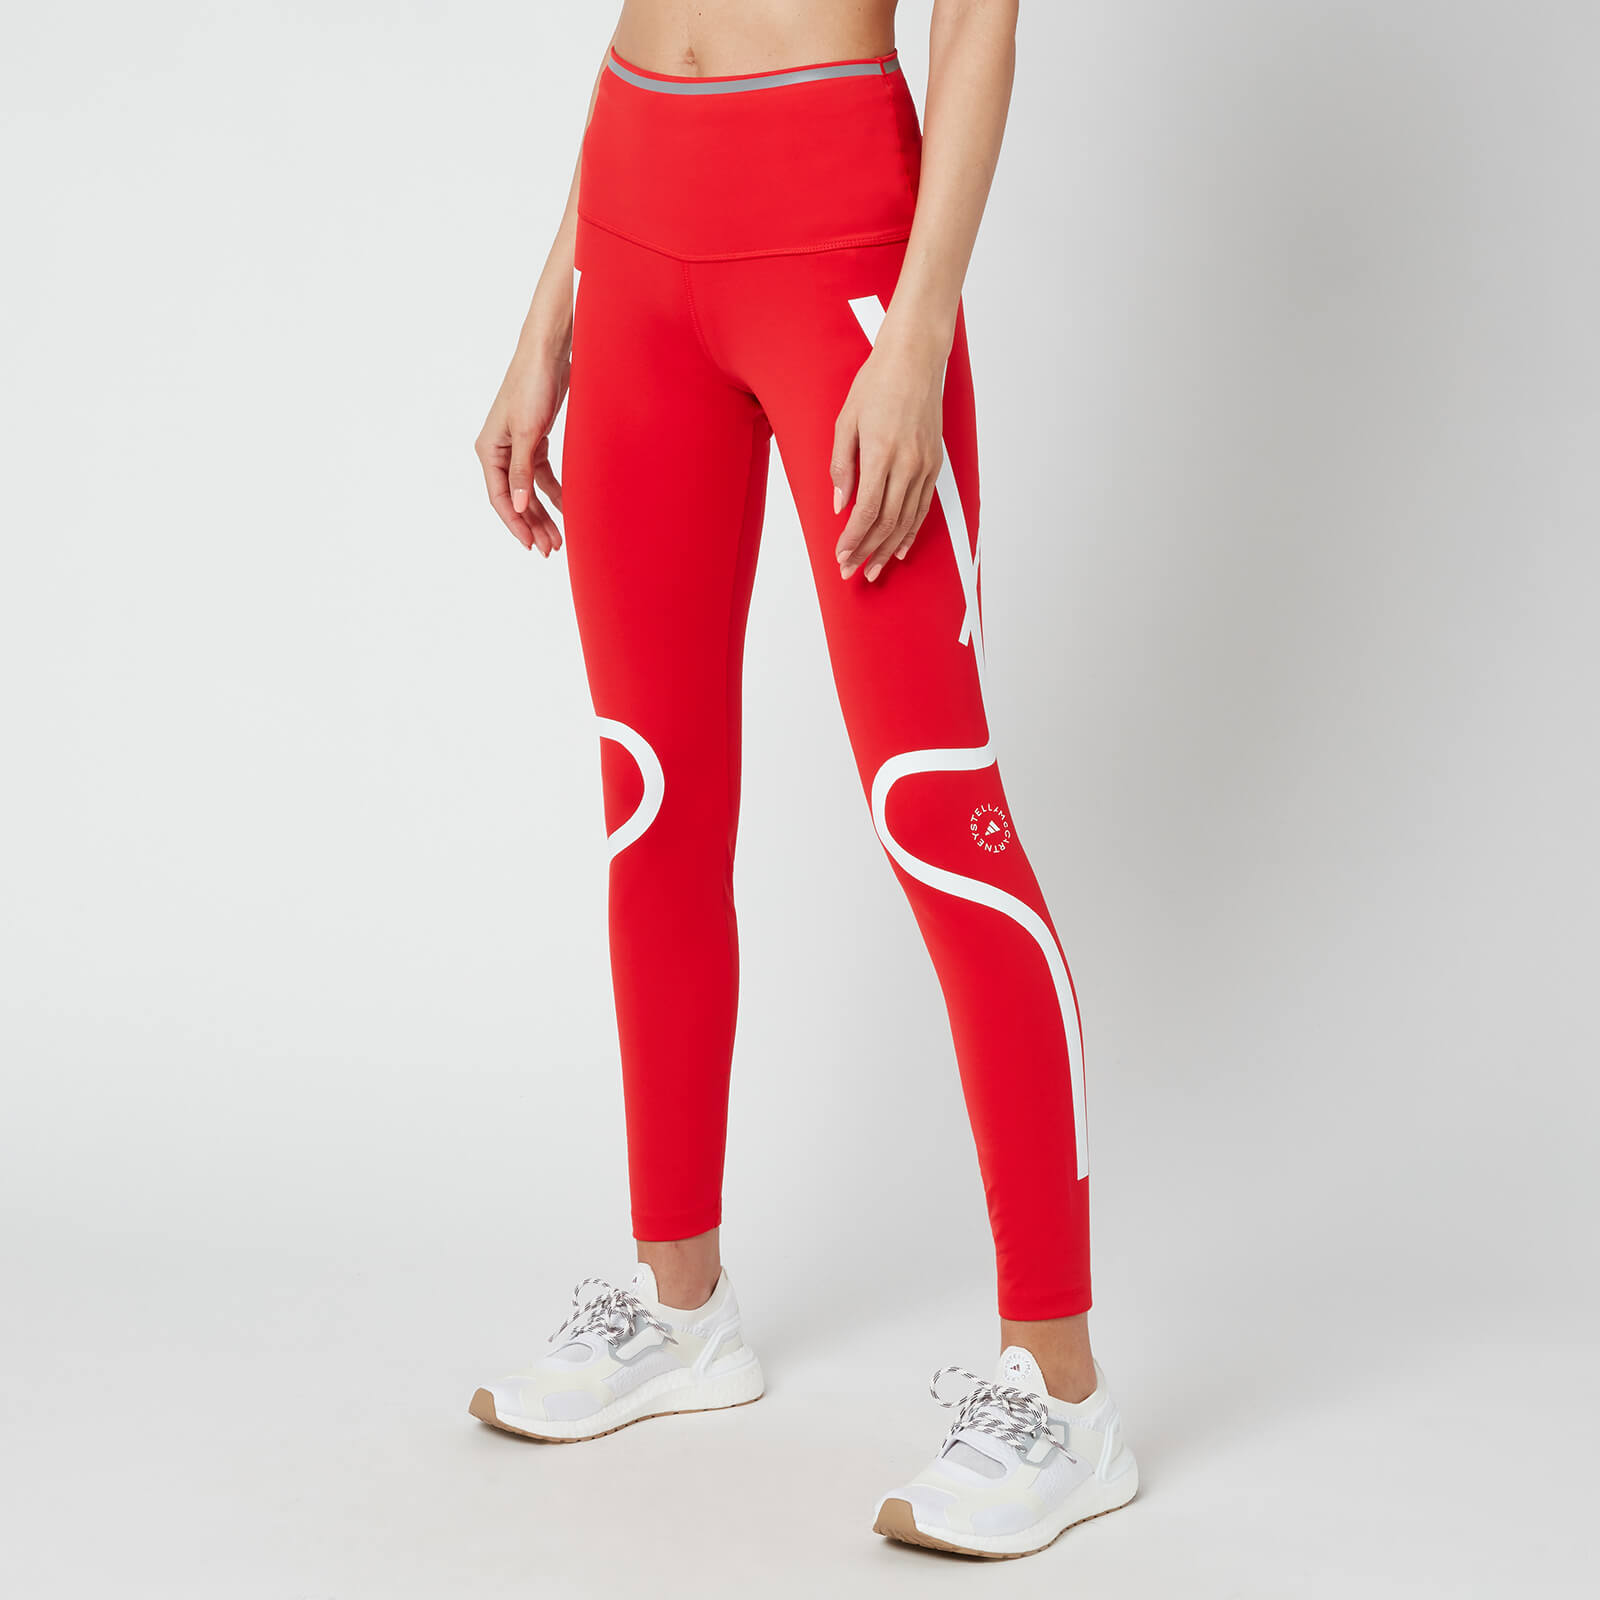 Adidas by Stella McCartney Women's Truepace Long Primeblue Tights - Red - S